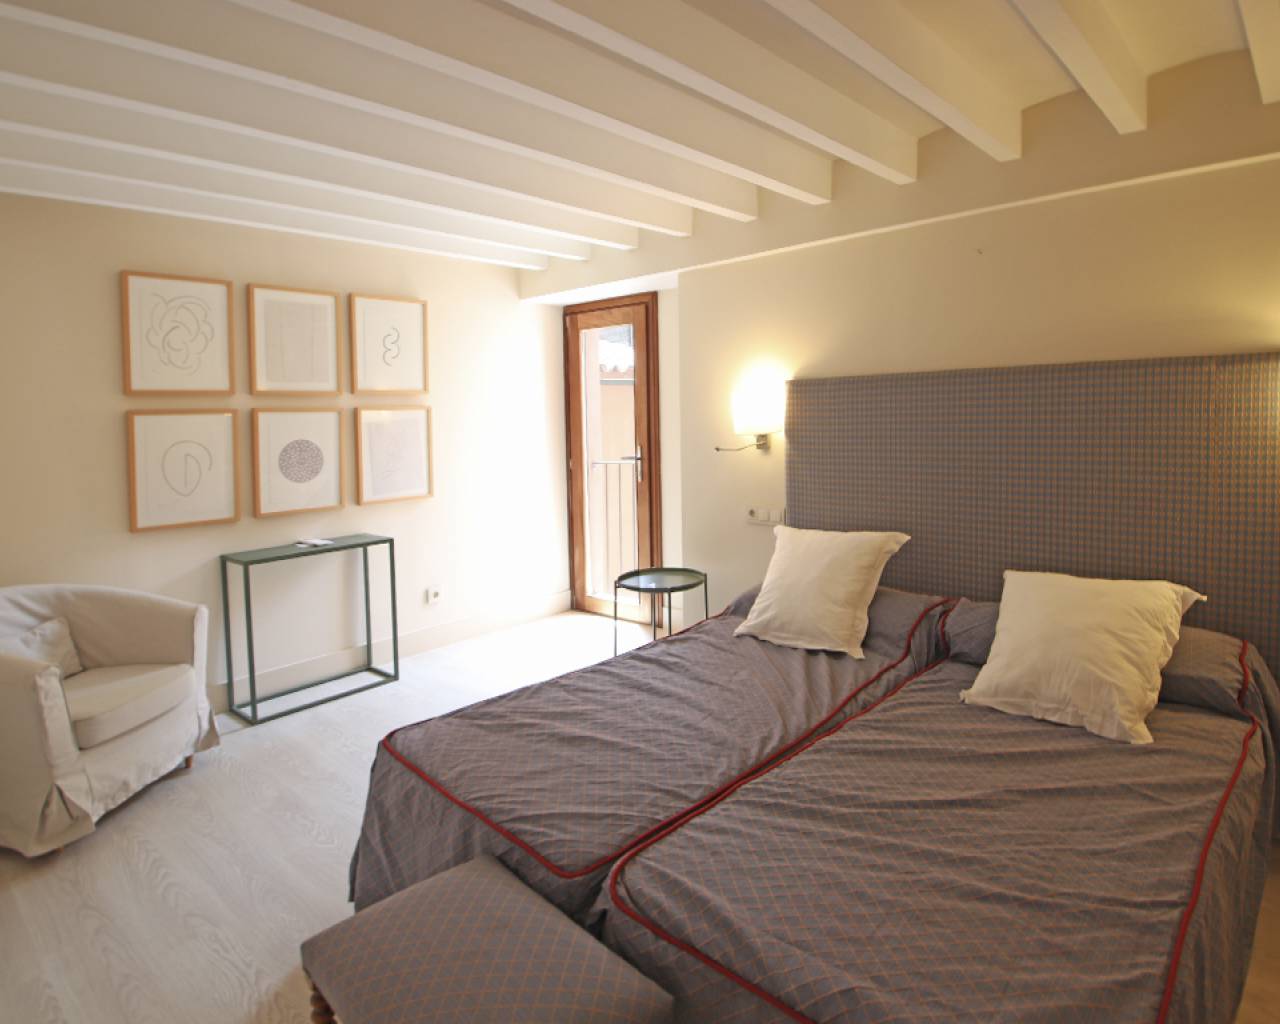 Property for rent in Palma de Mallorca